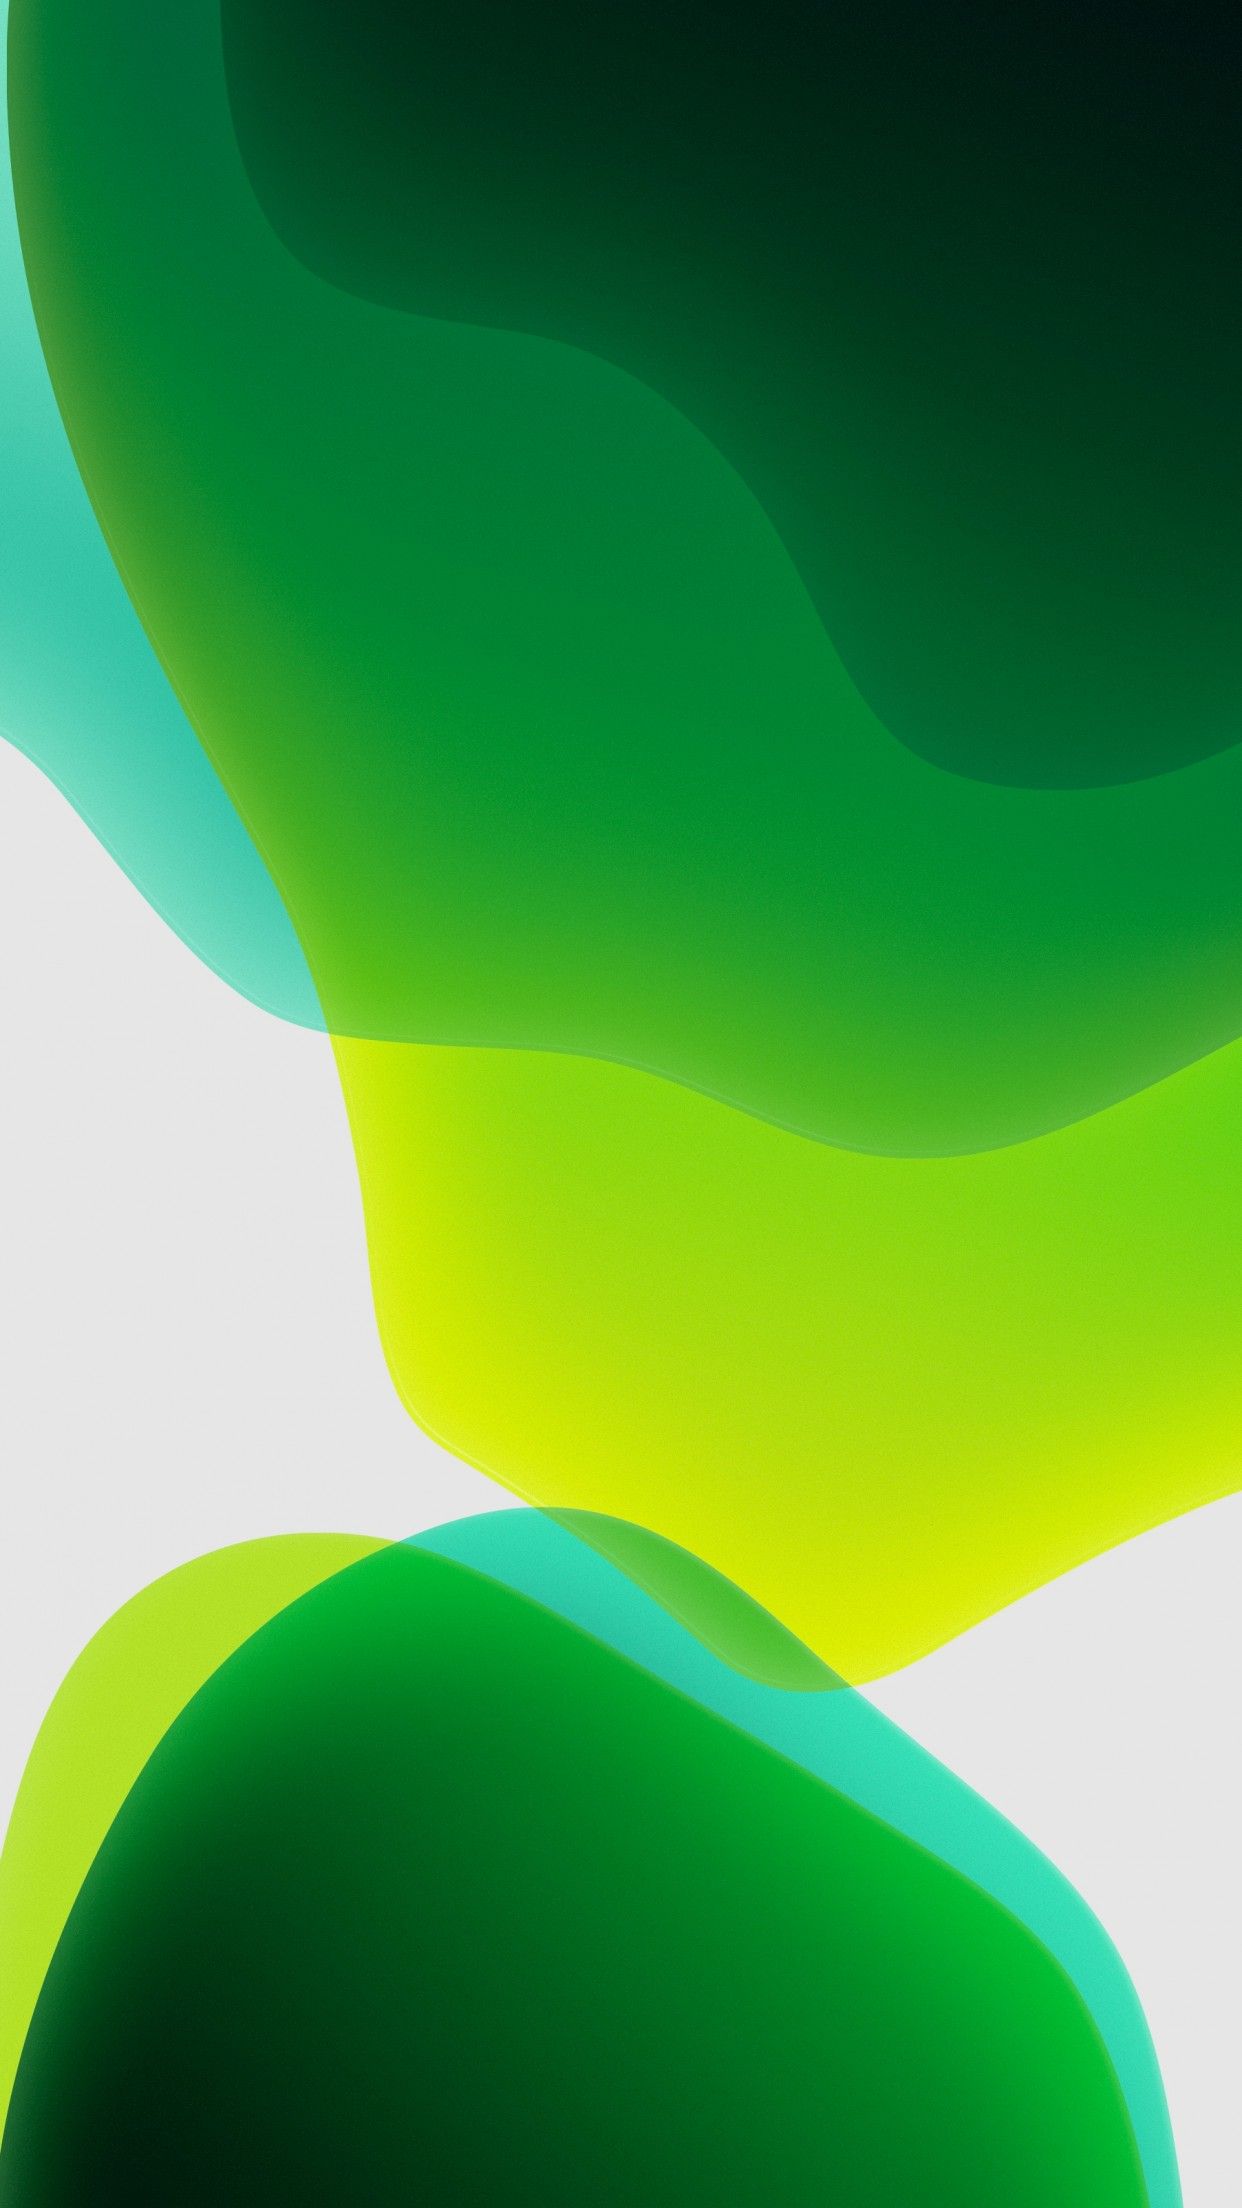 iPadOS 4K Wallpaper, Stock, Green, White background, iPad, iOS HD, Abstract